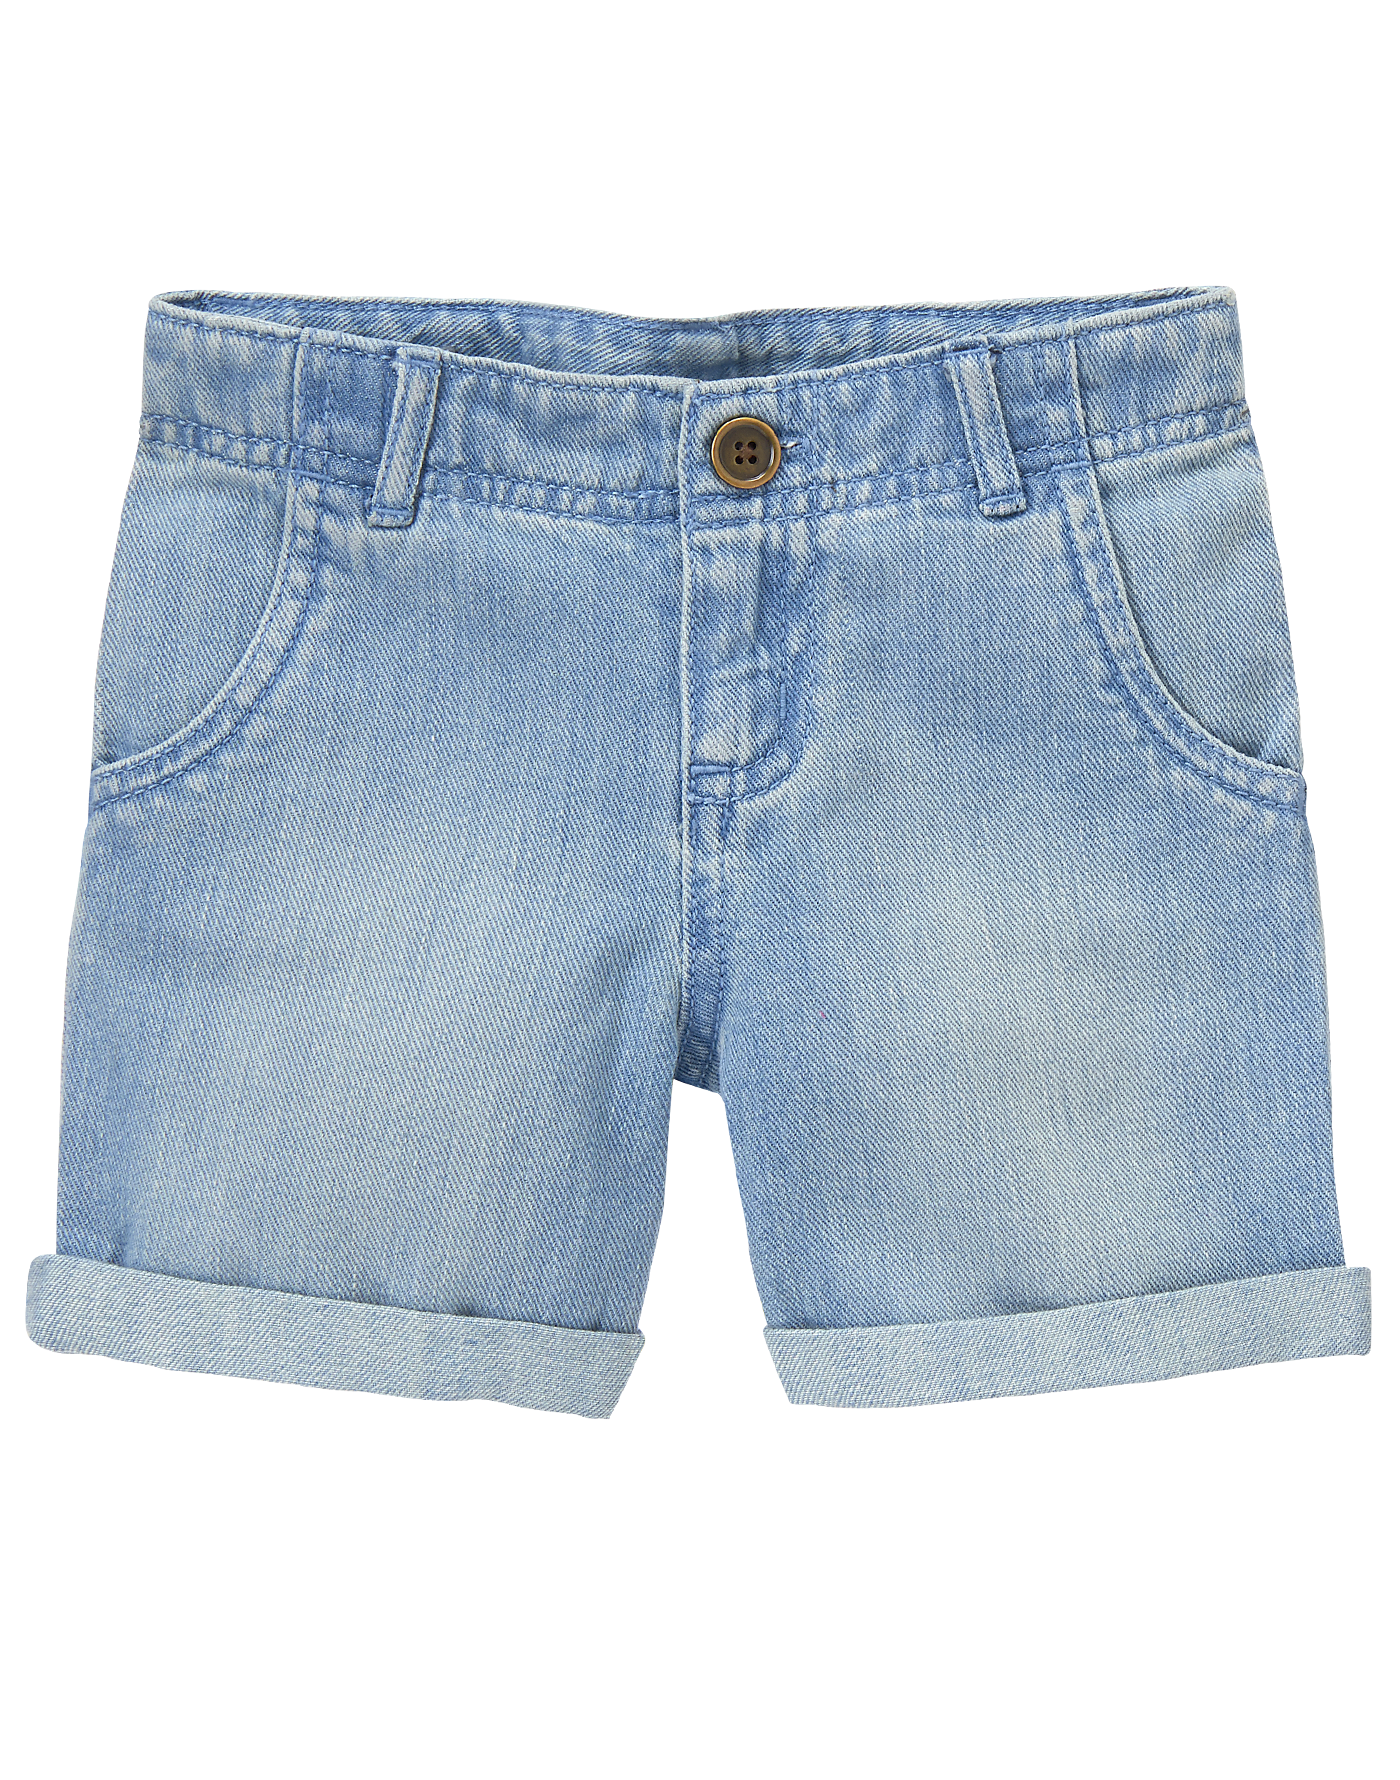 Blue Jean shorts transparent background #42490